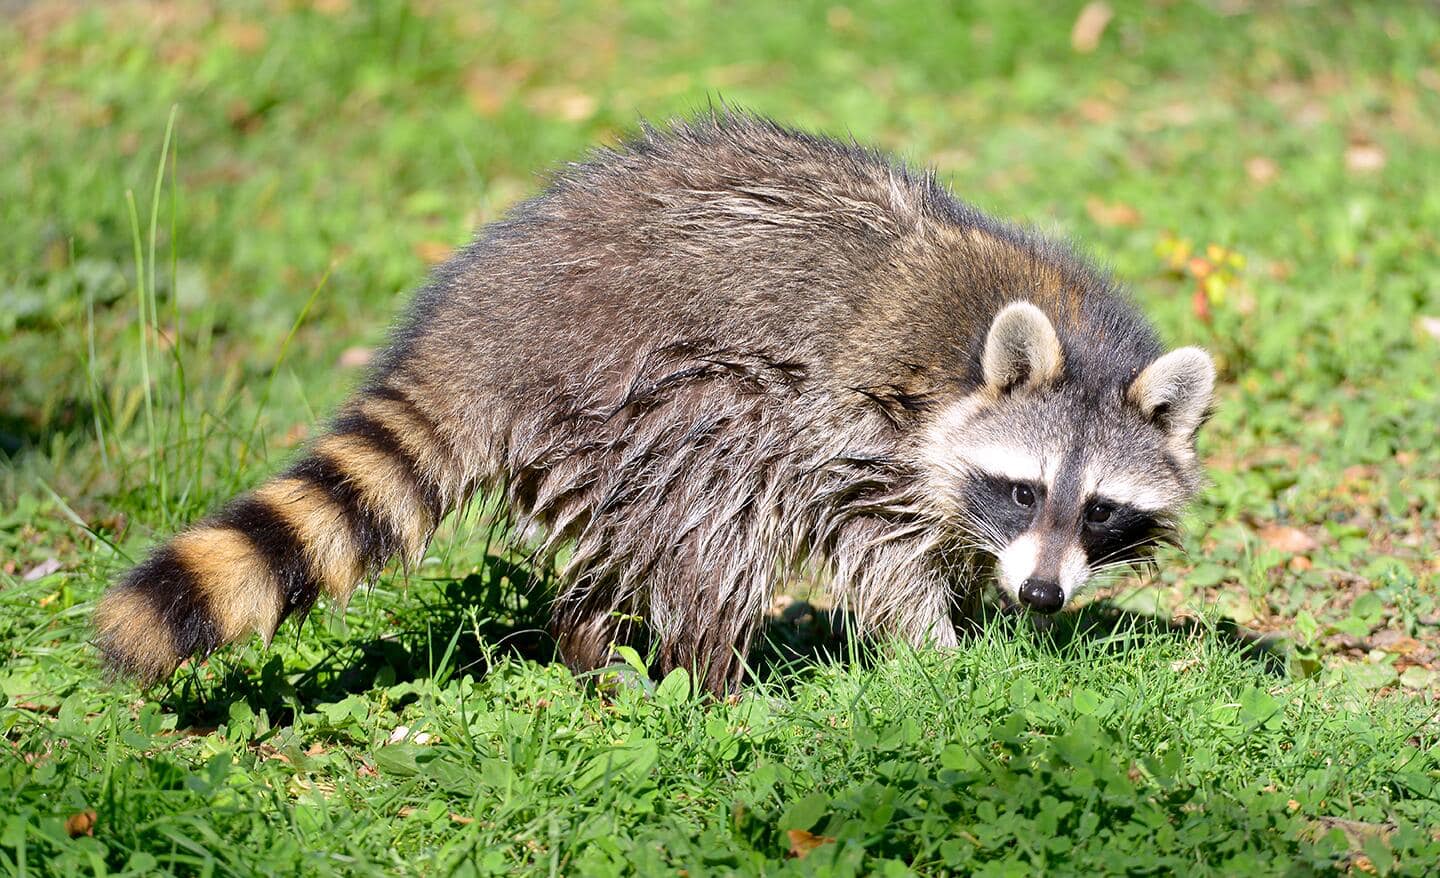 Raccoon scratching for grubs in soil